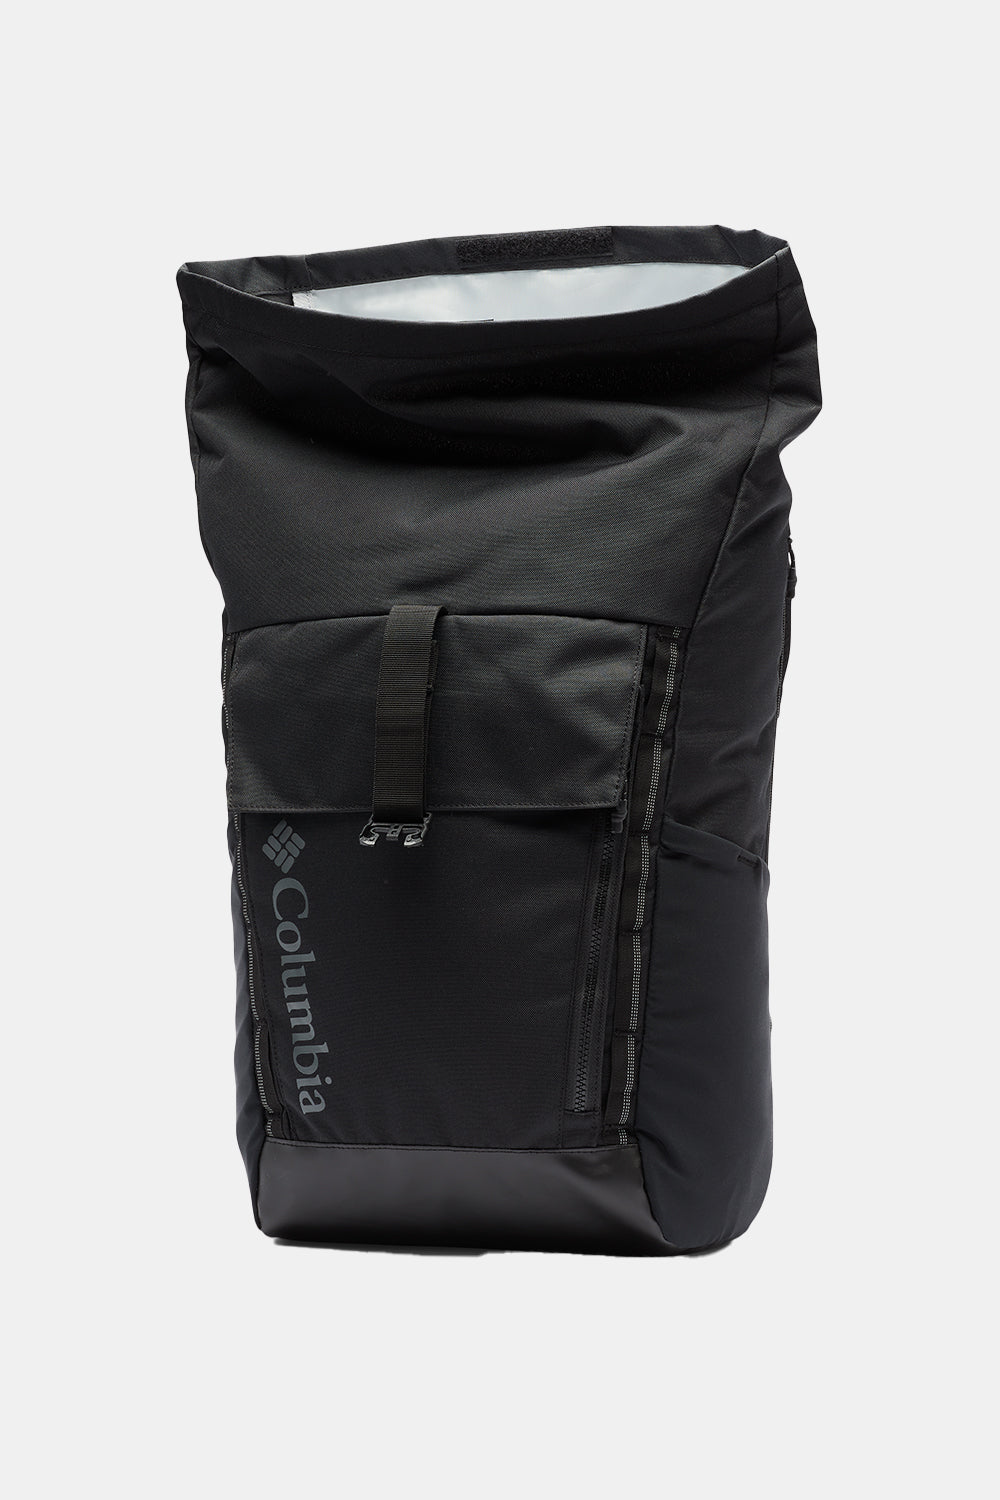 Columbia Convey II 27L Rolltop Backpack (Black)
